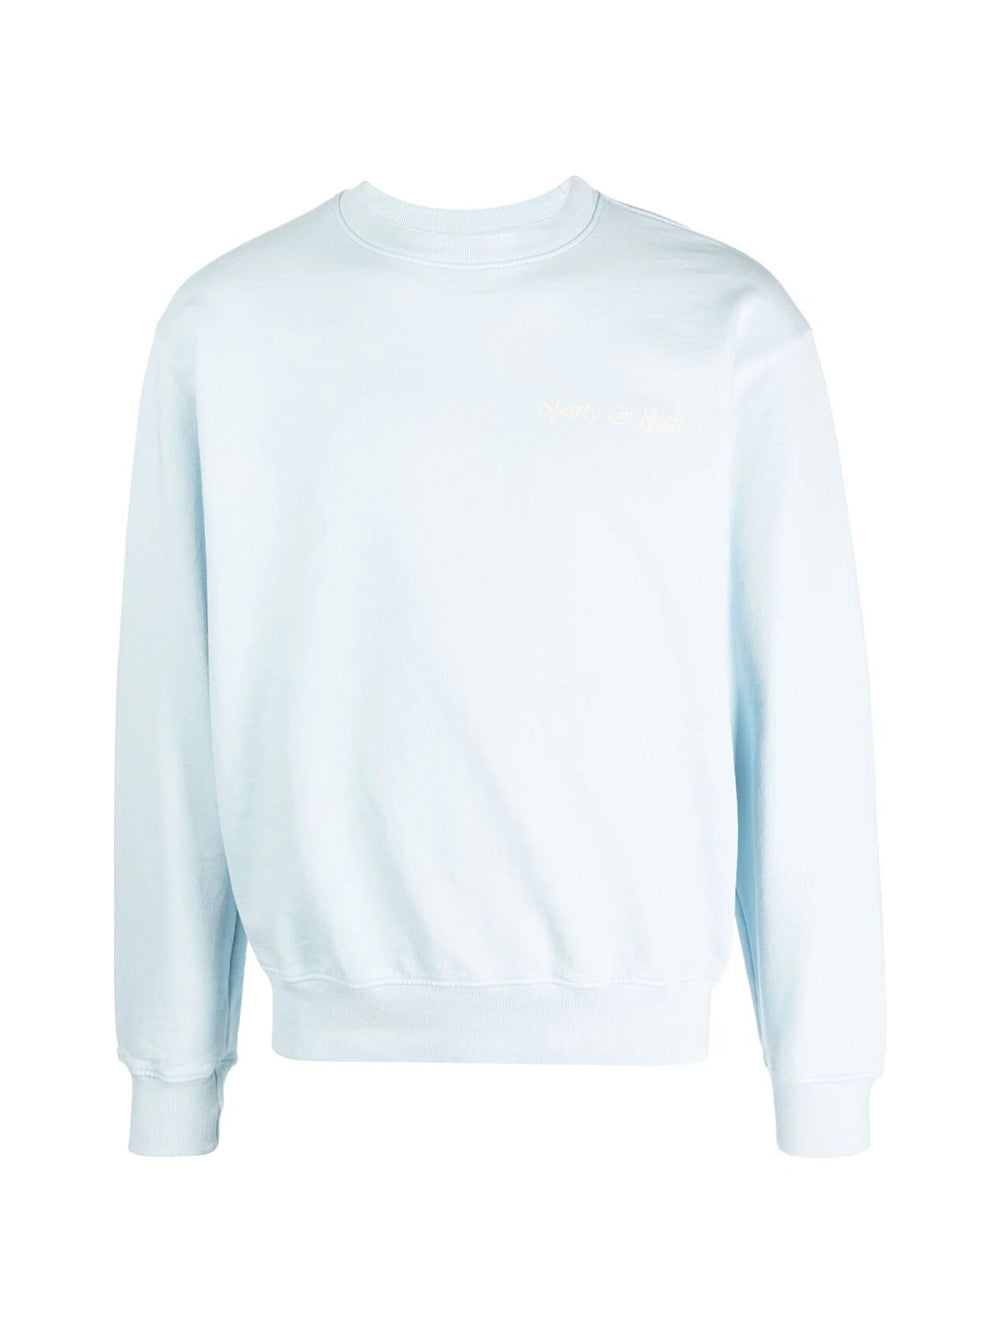 Light Blue Crewneck Sweatshirt with Embroidery